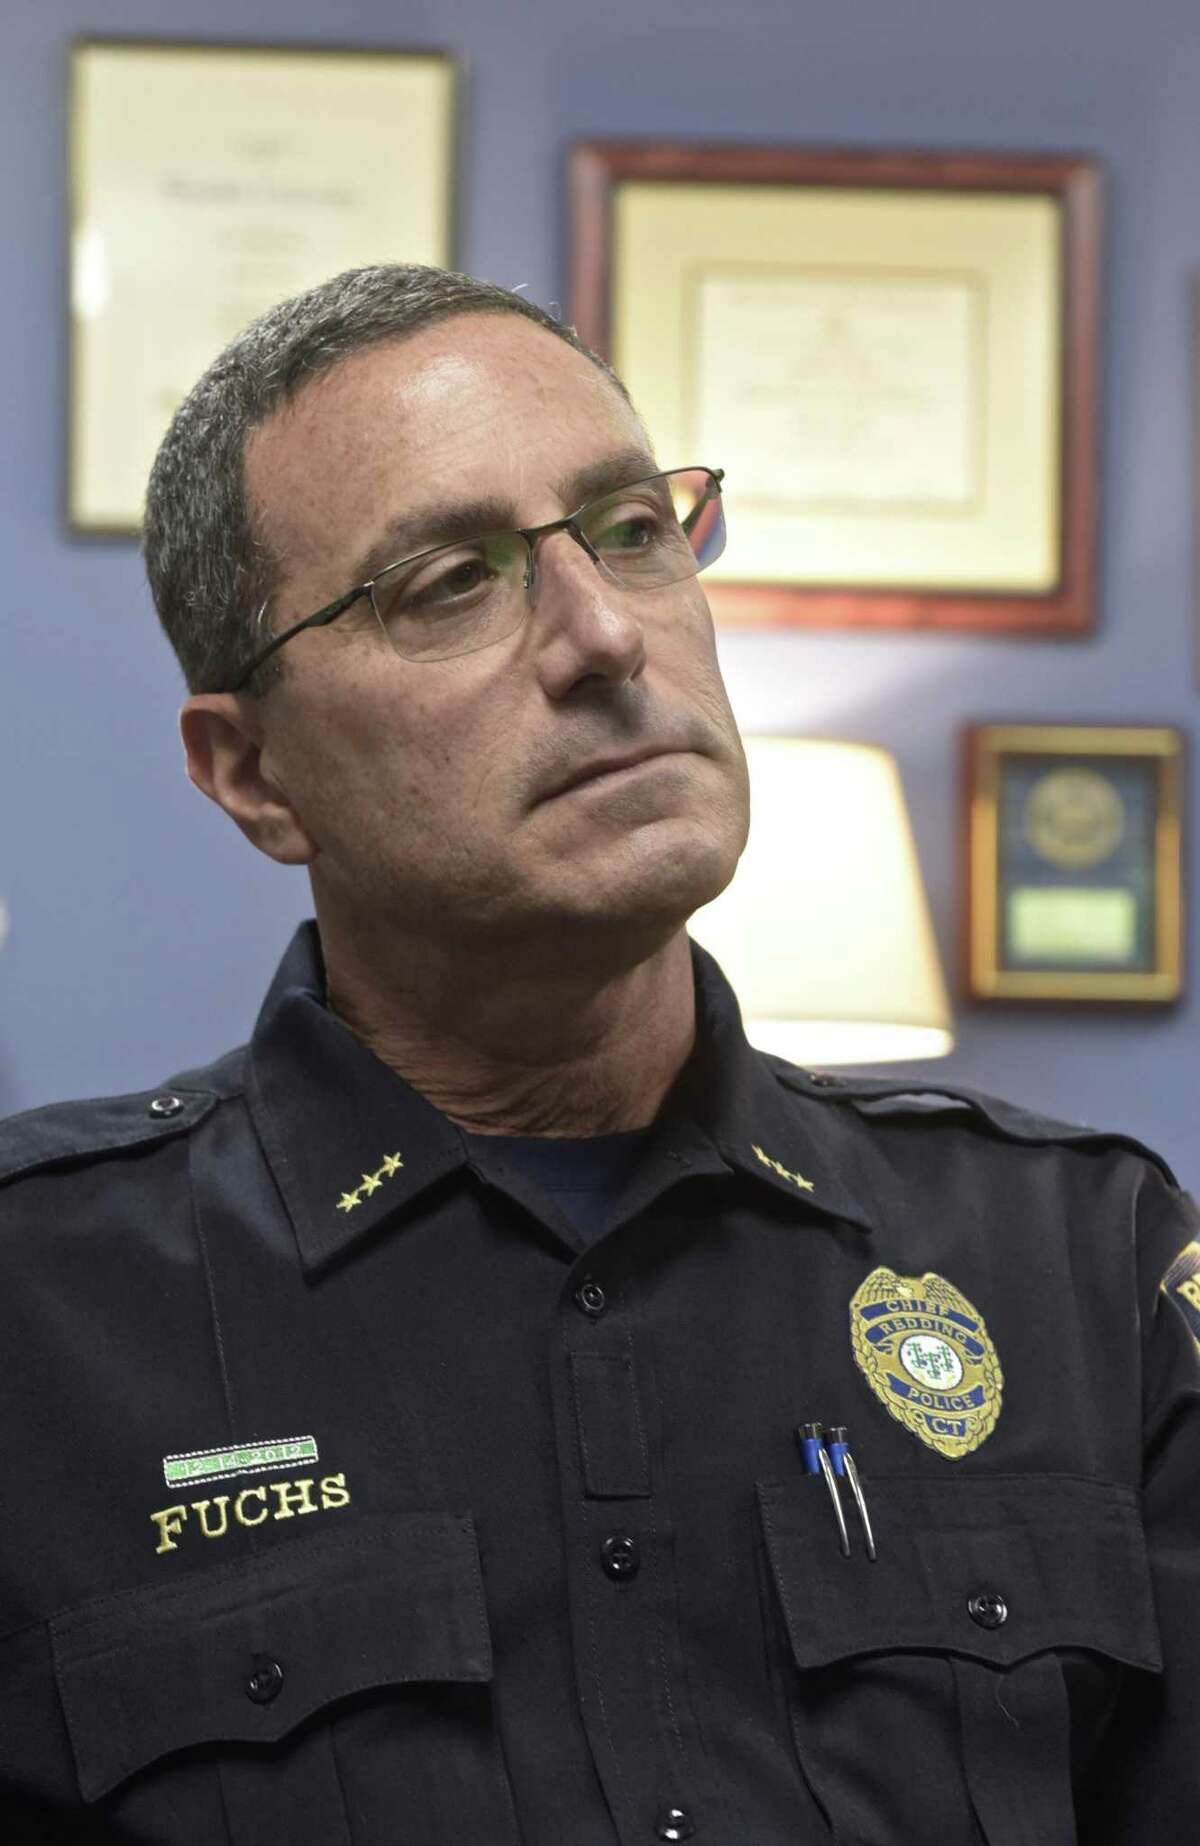 File photo of Redding Police Chief Doug Fuchs